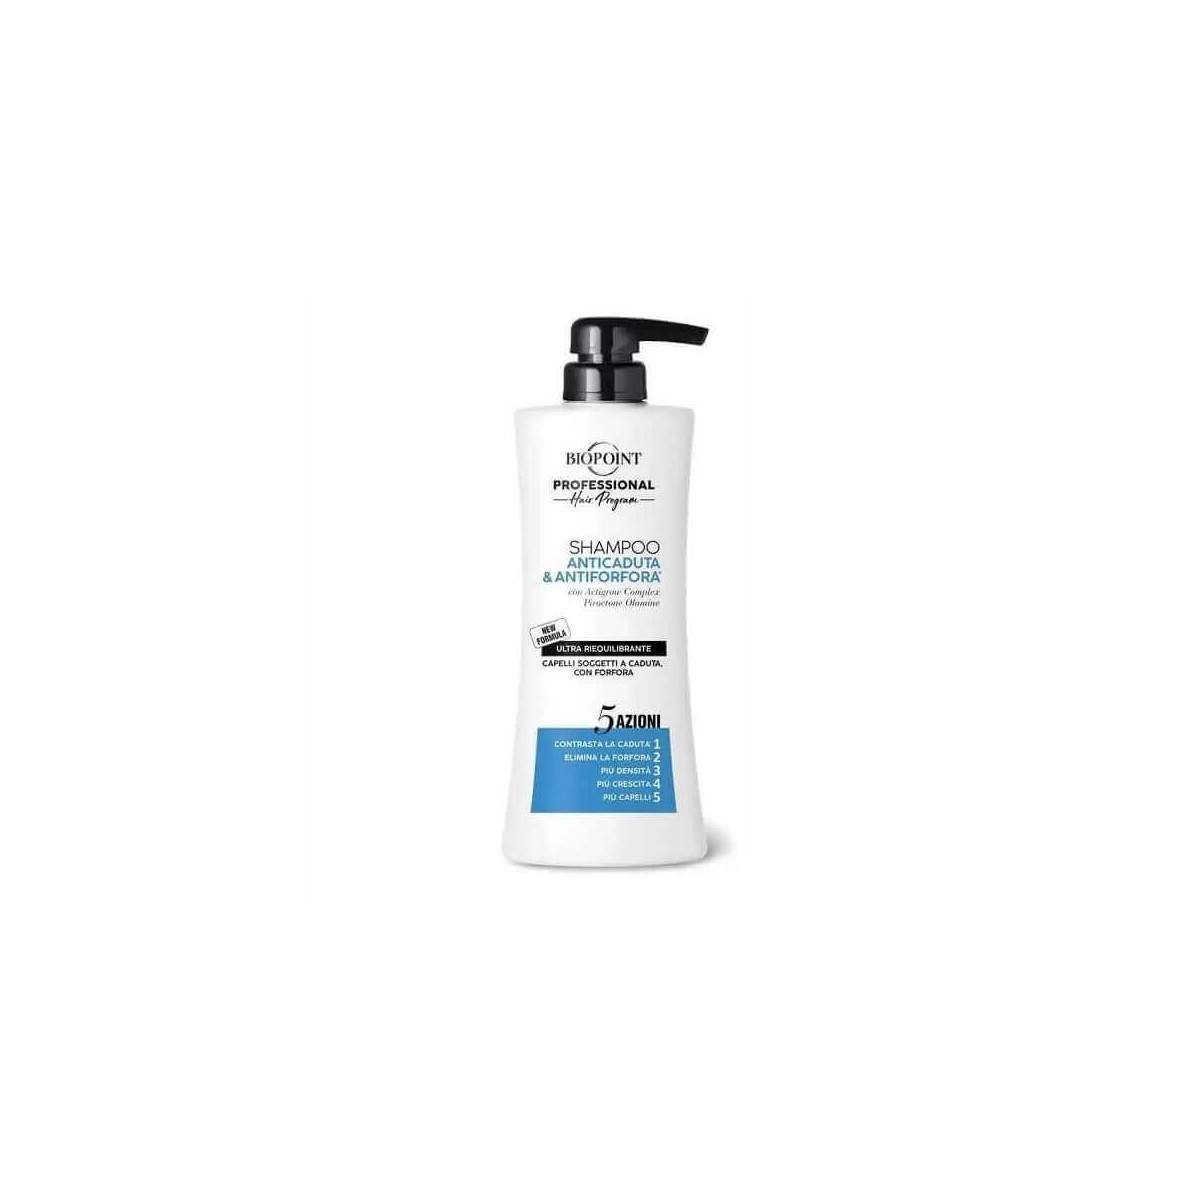 Biopoint Professional Anticaduta & Antiforfora Shampoo 400ml